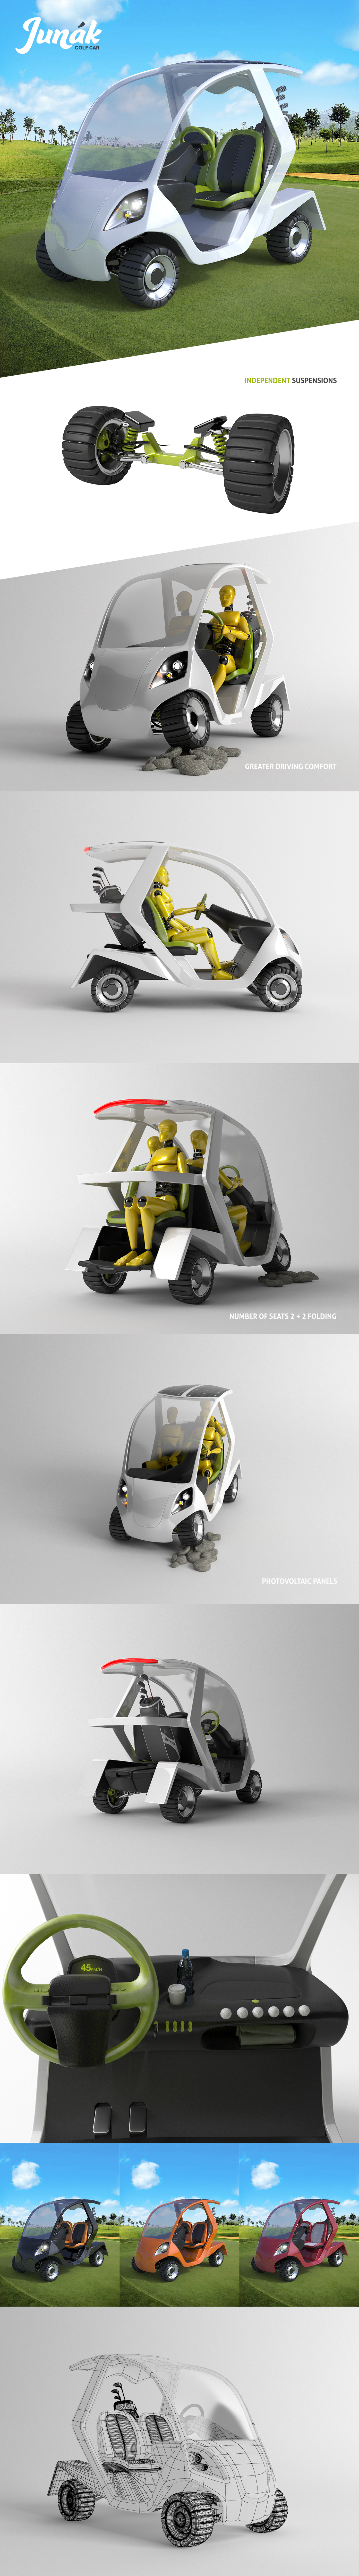 car golf concept Vehicle design automotive   fresh ecological Eko clean modern luxury cart